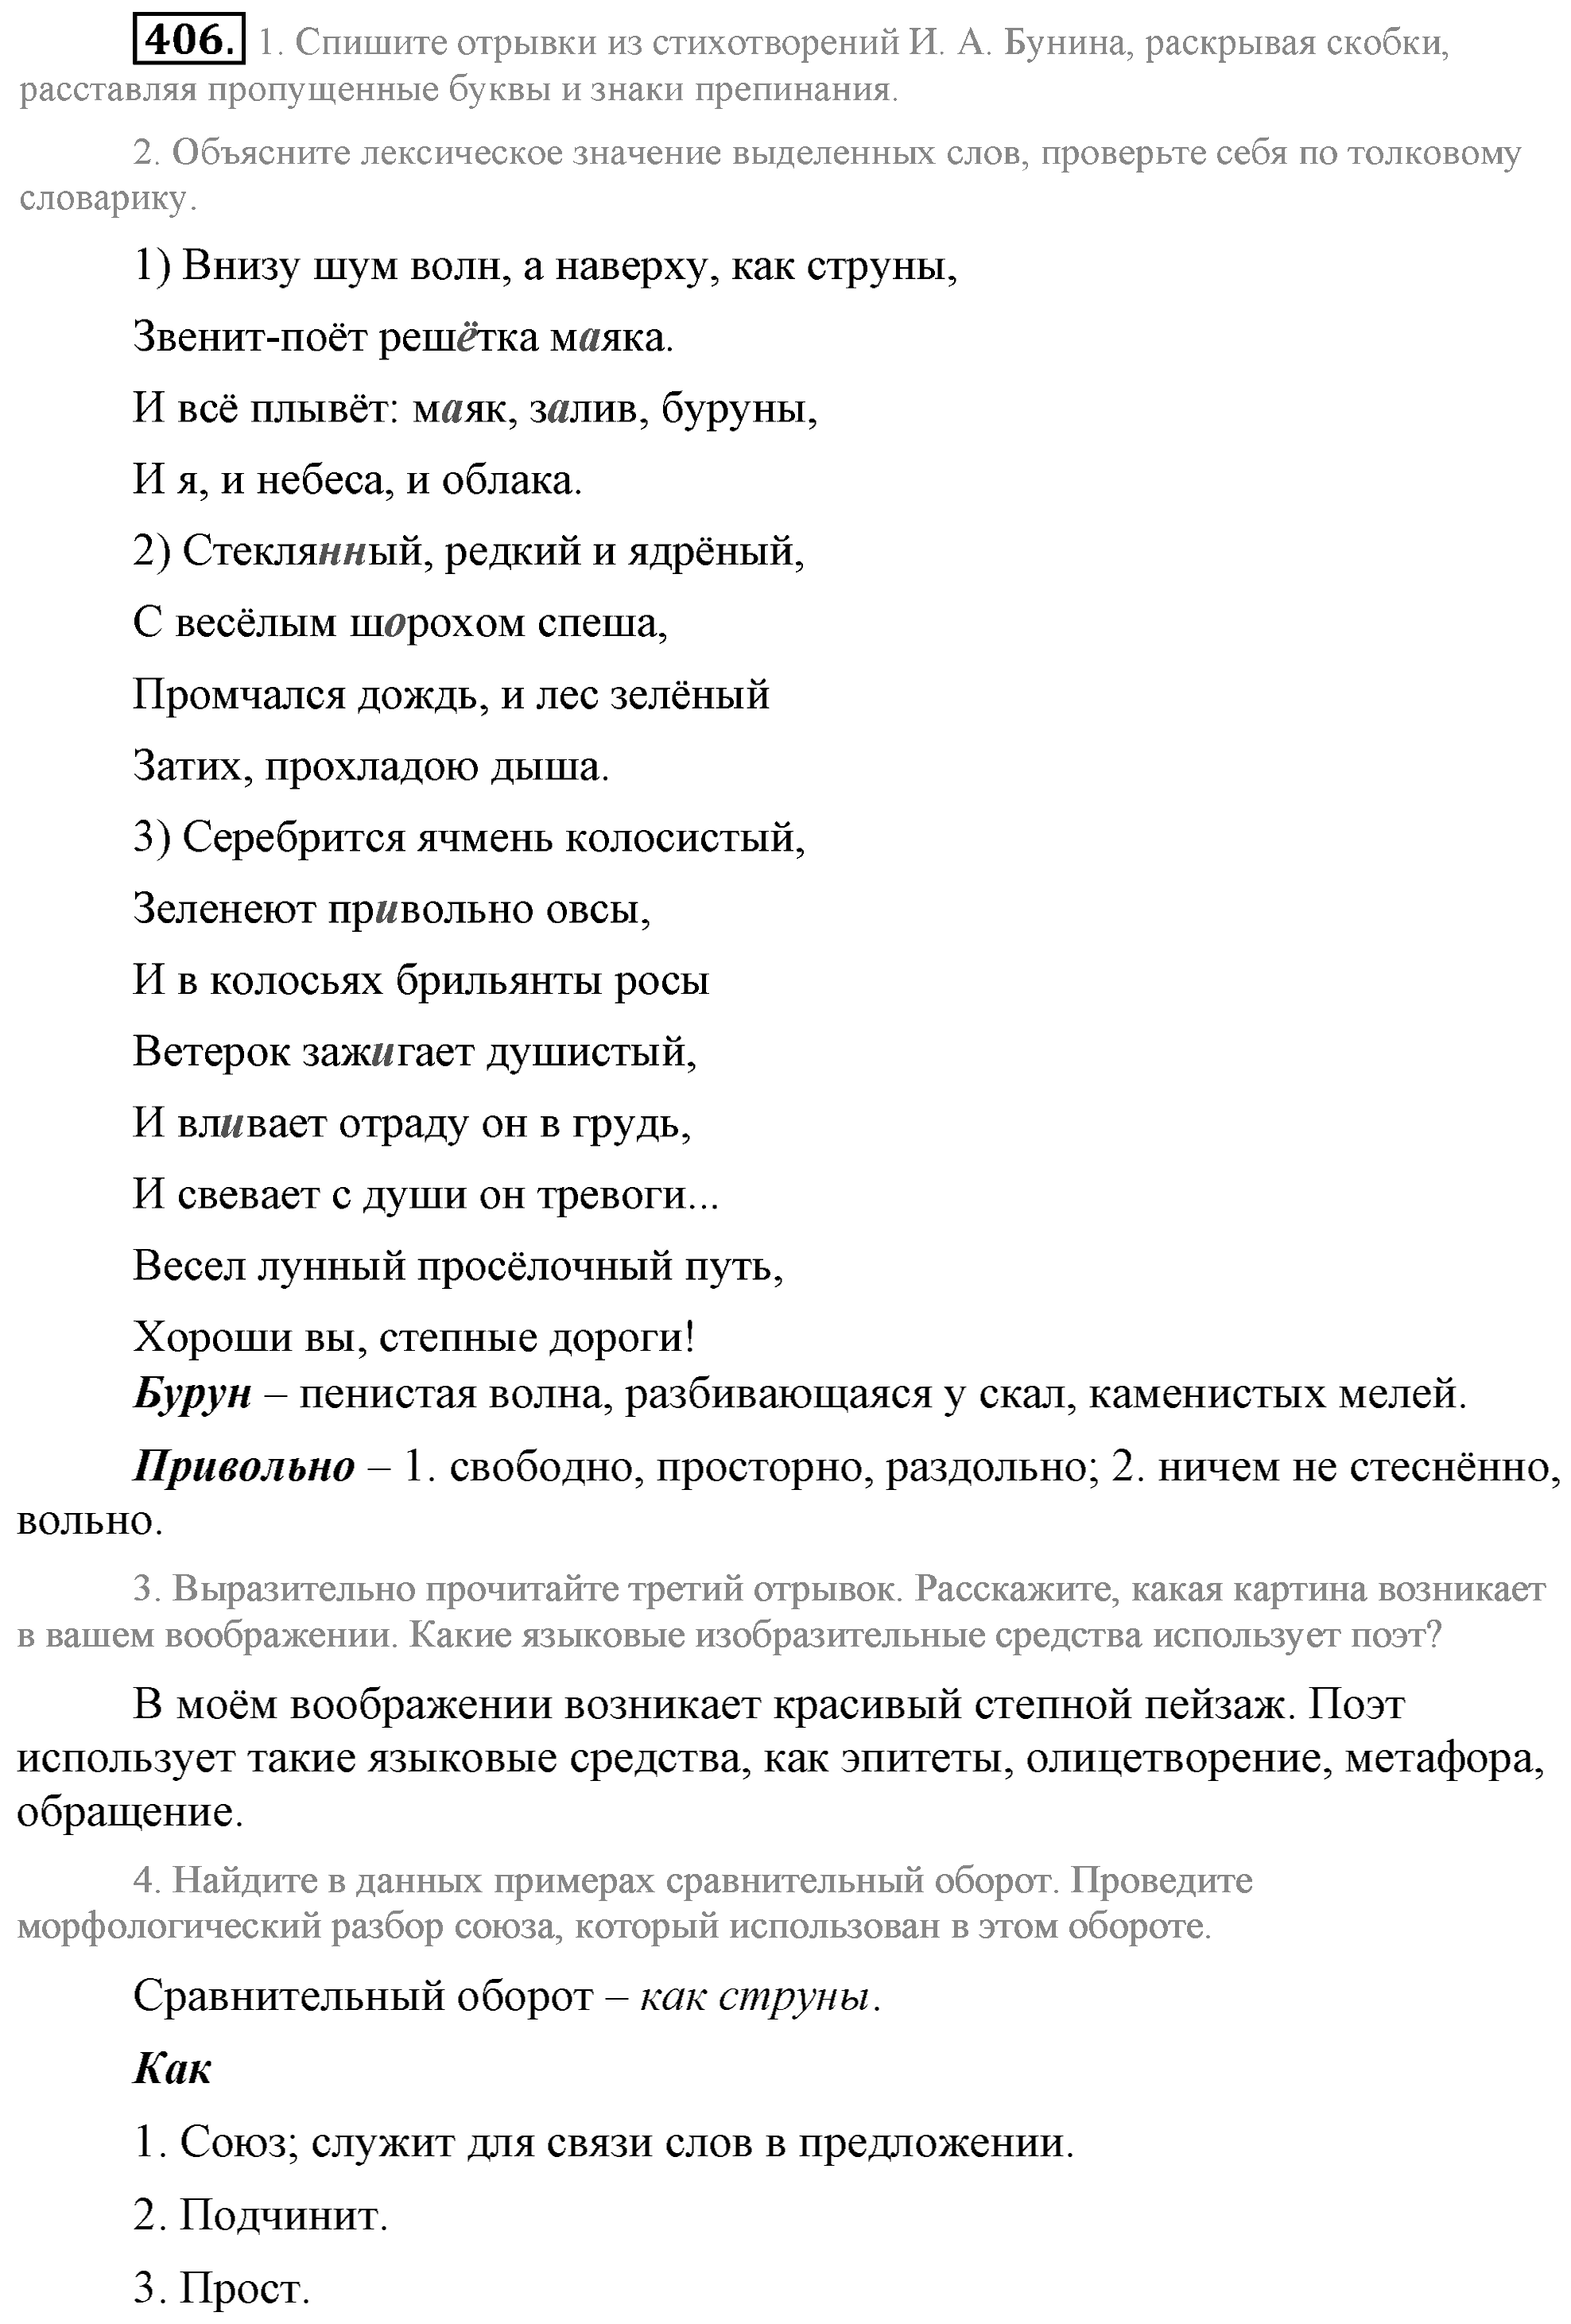 Практика, 7 класс, М.М. Разумовская, 2009, задача: 406